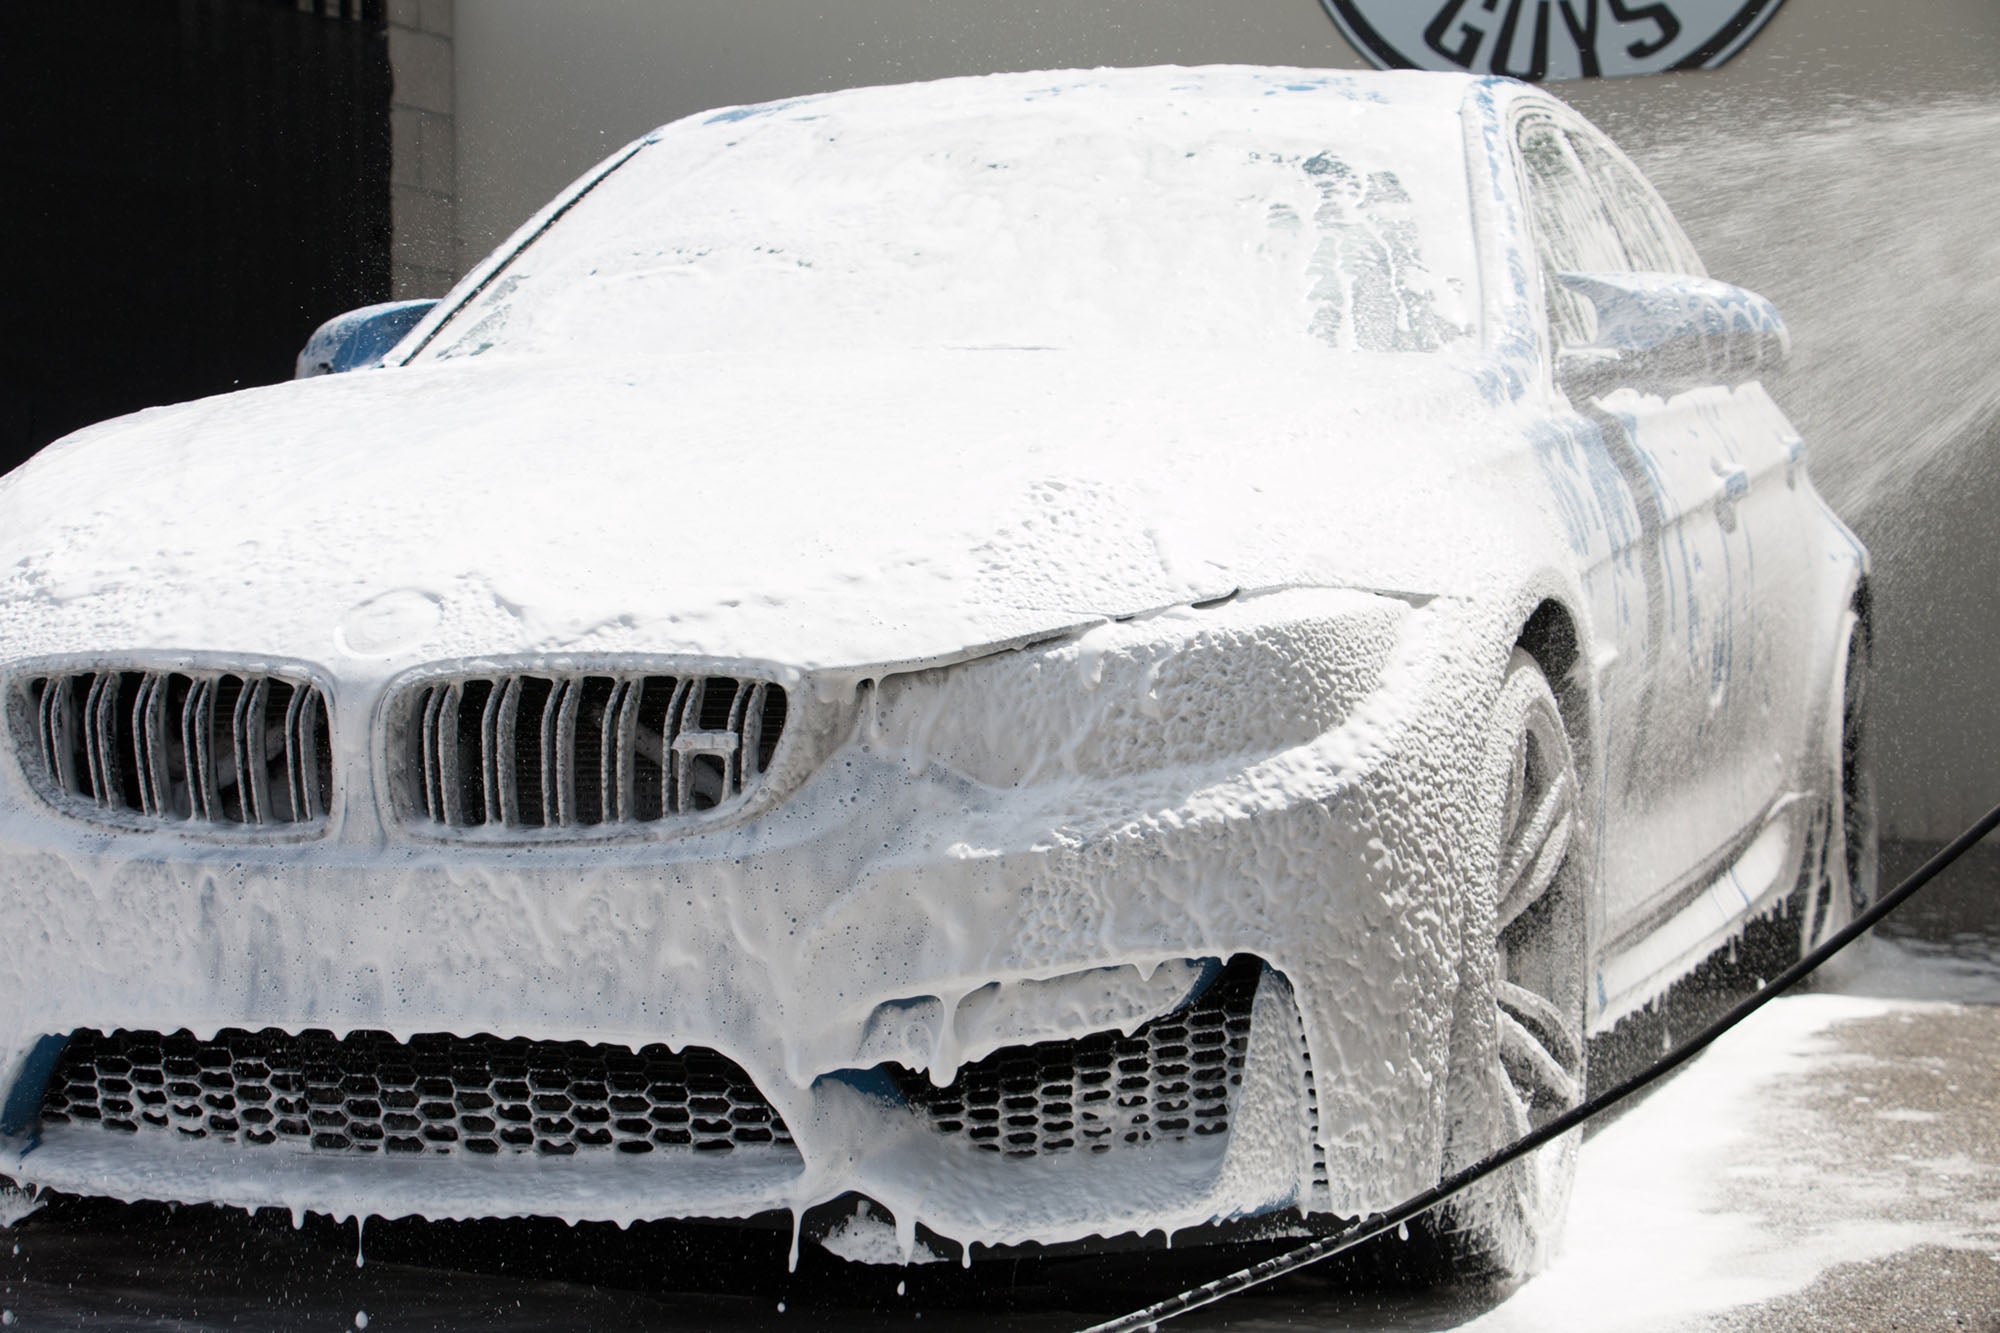 Car Wash Soap